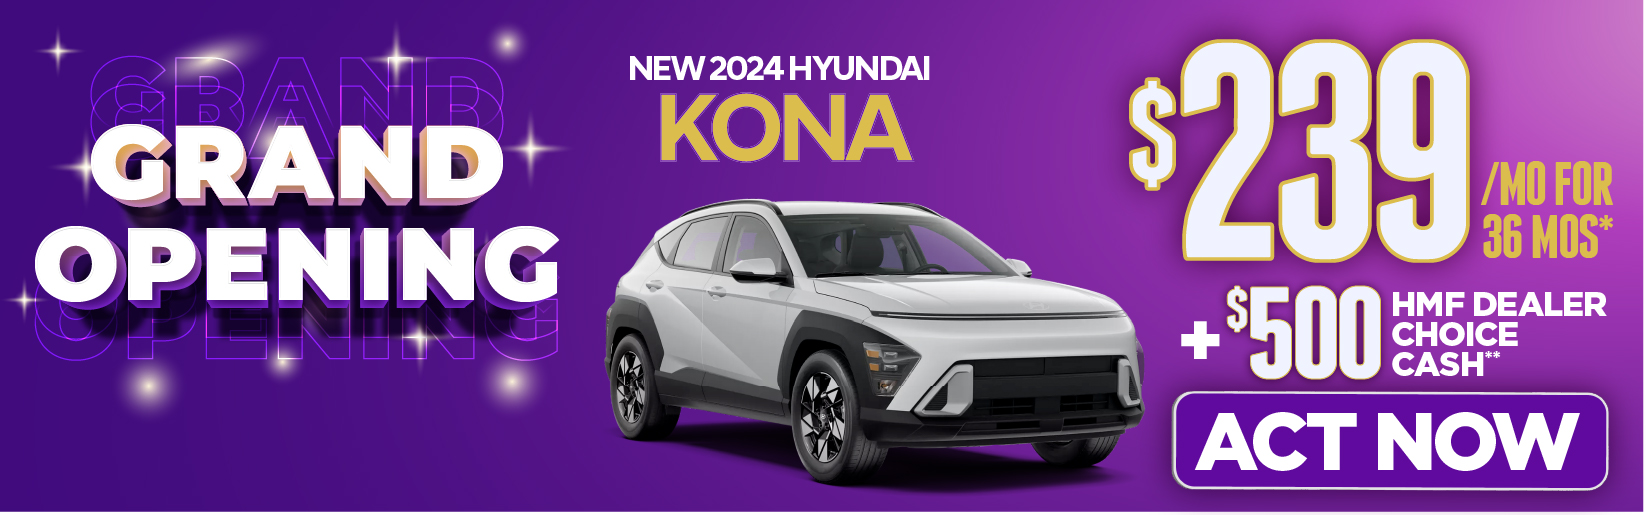 New 2024 Hyundai Kona - $239 per month for 36 months. Plus $500 DMF Dealer Choice Cash - Act Now